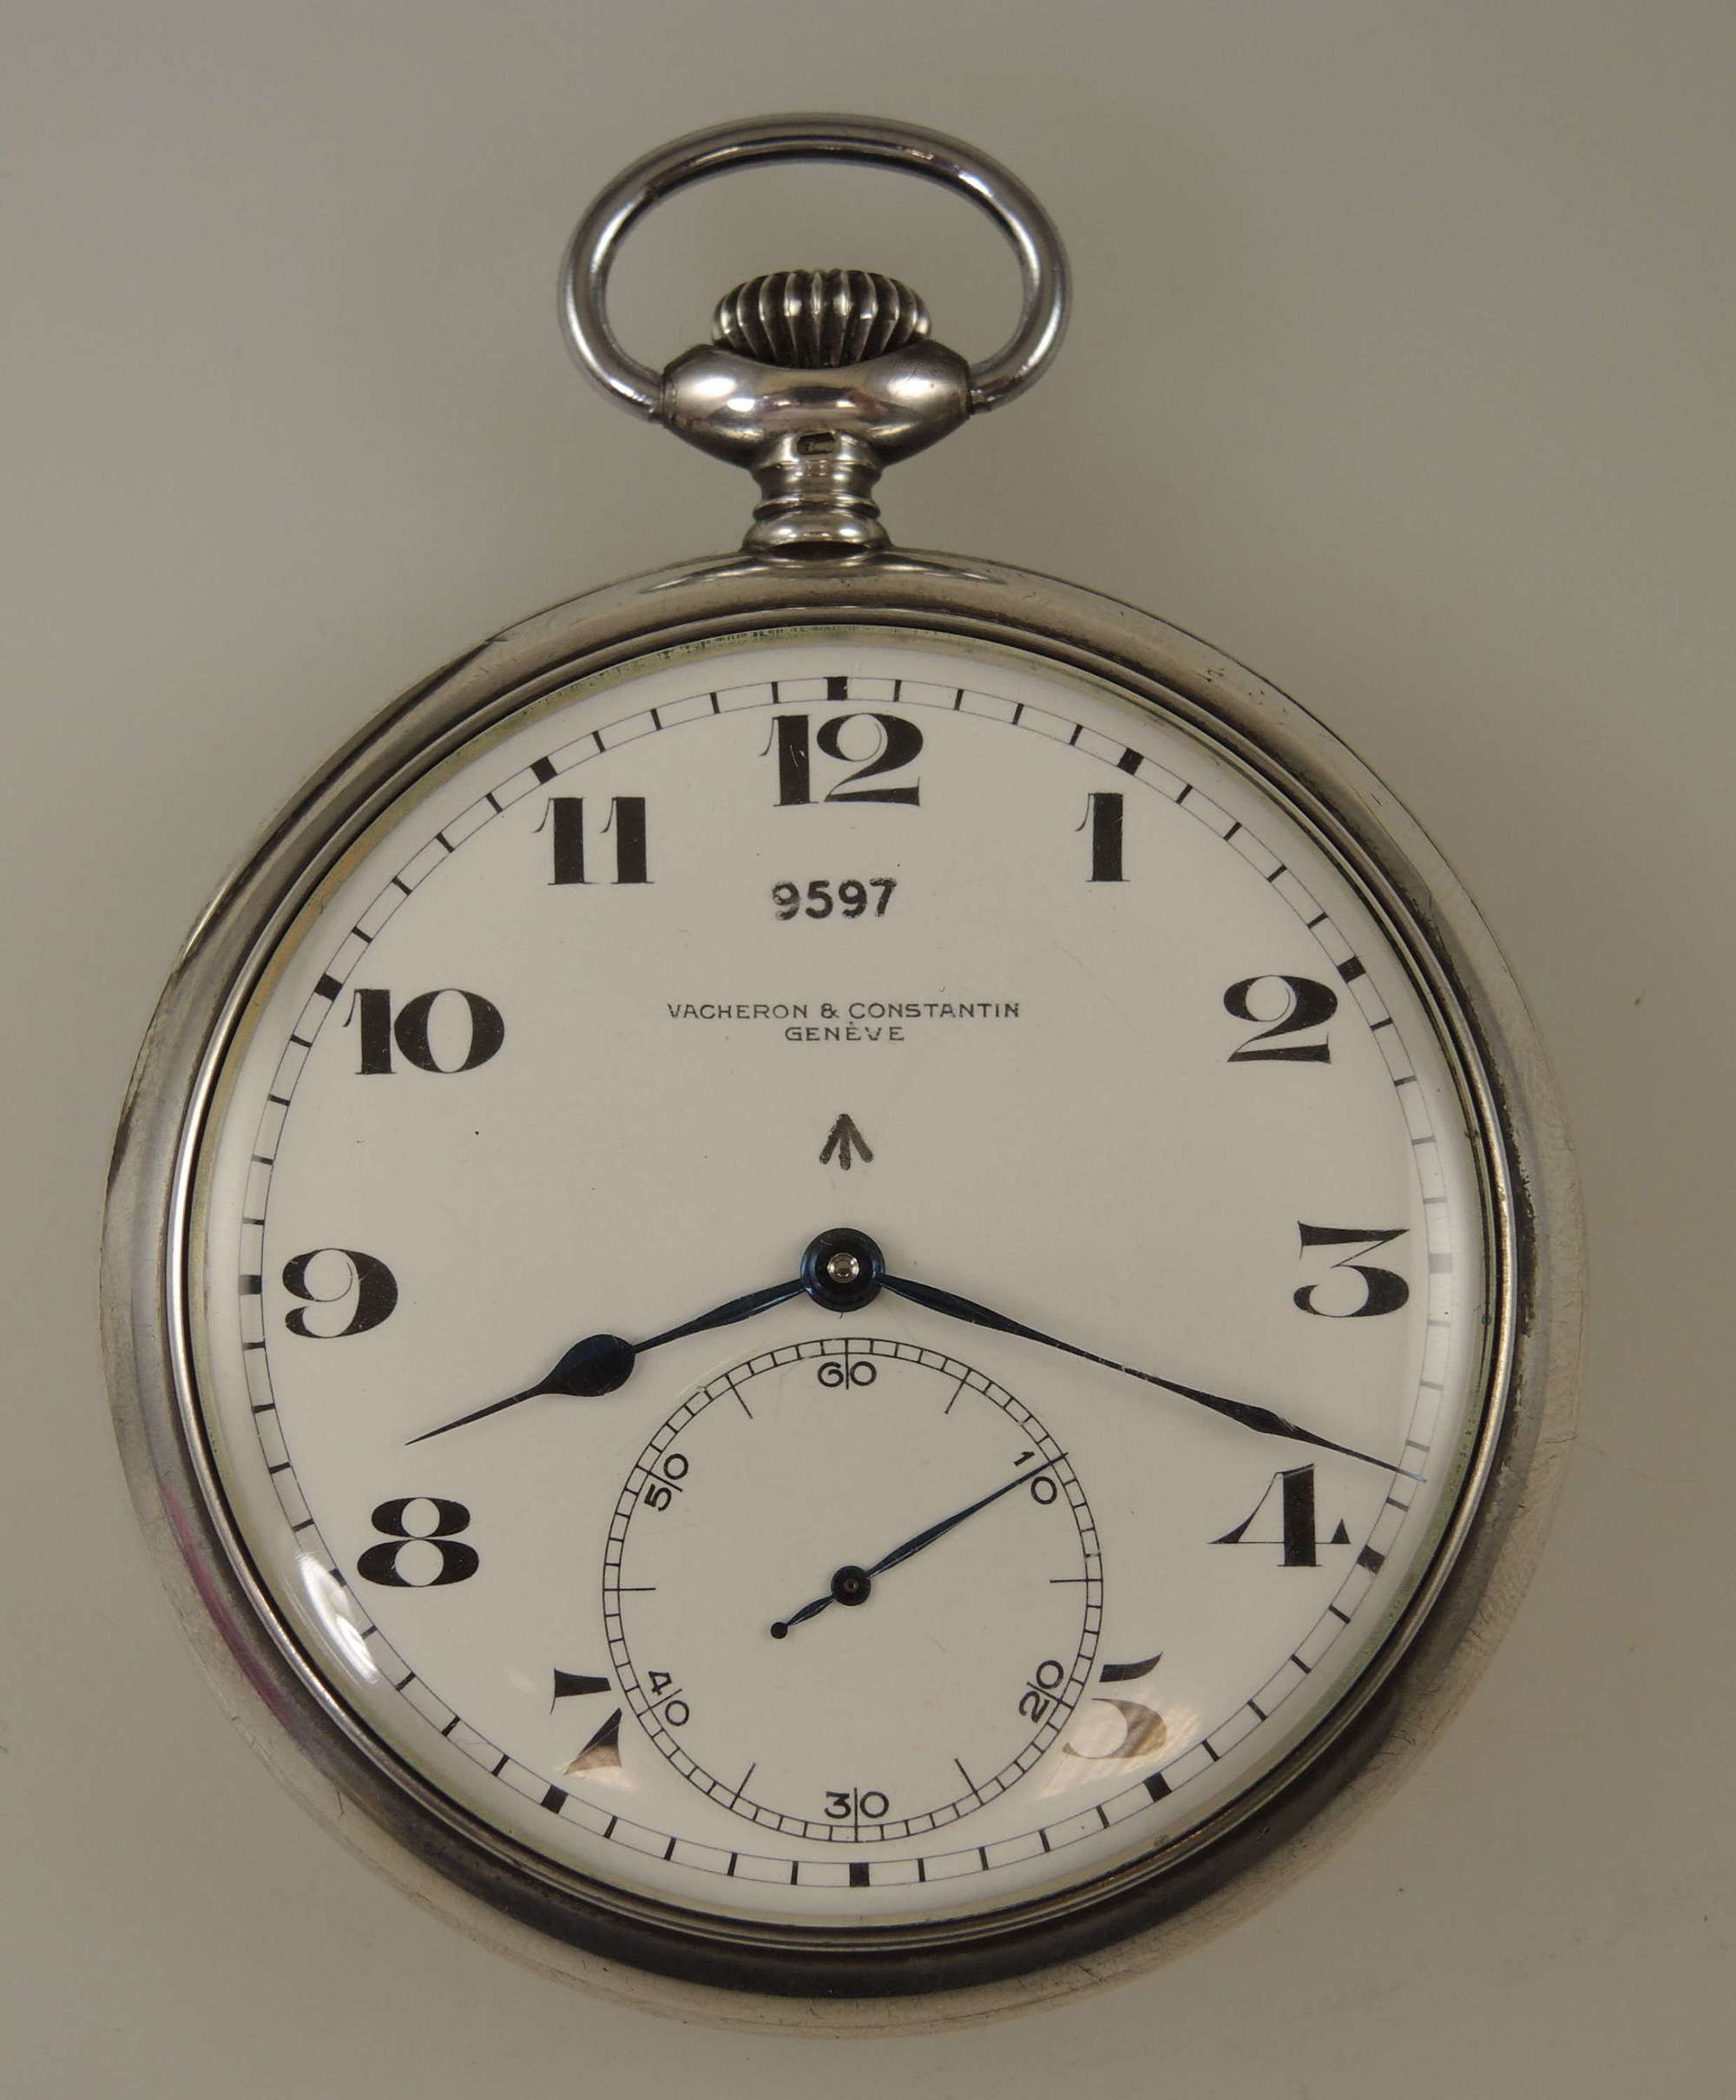 Rare HS2 Chronometer by Vacheron and Constantin c1940